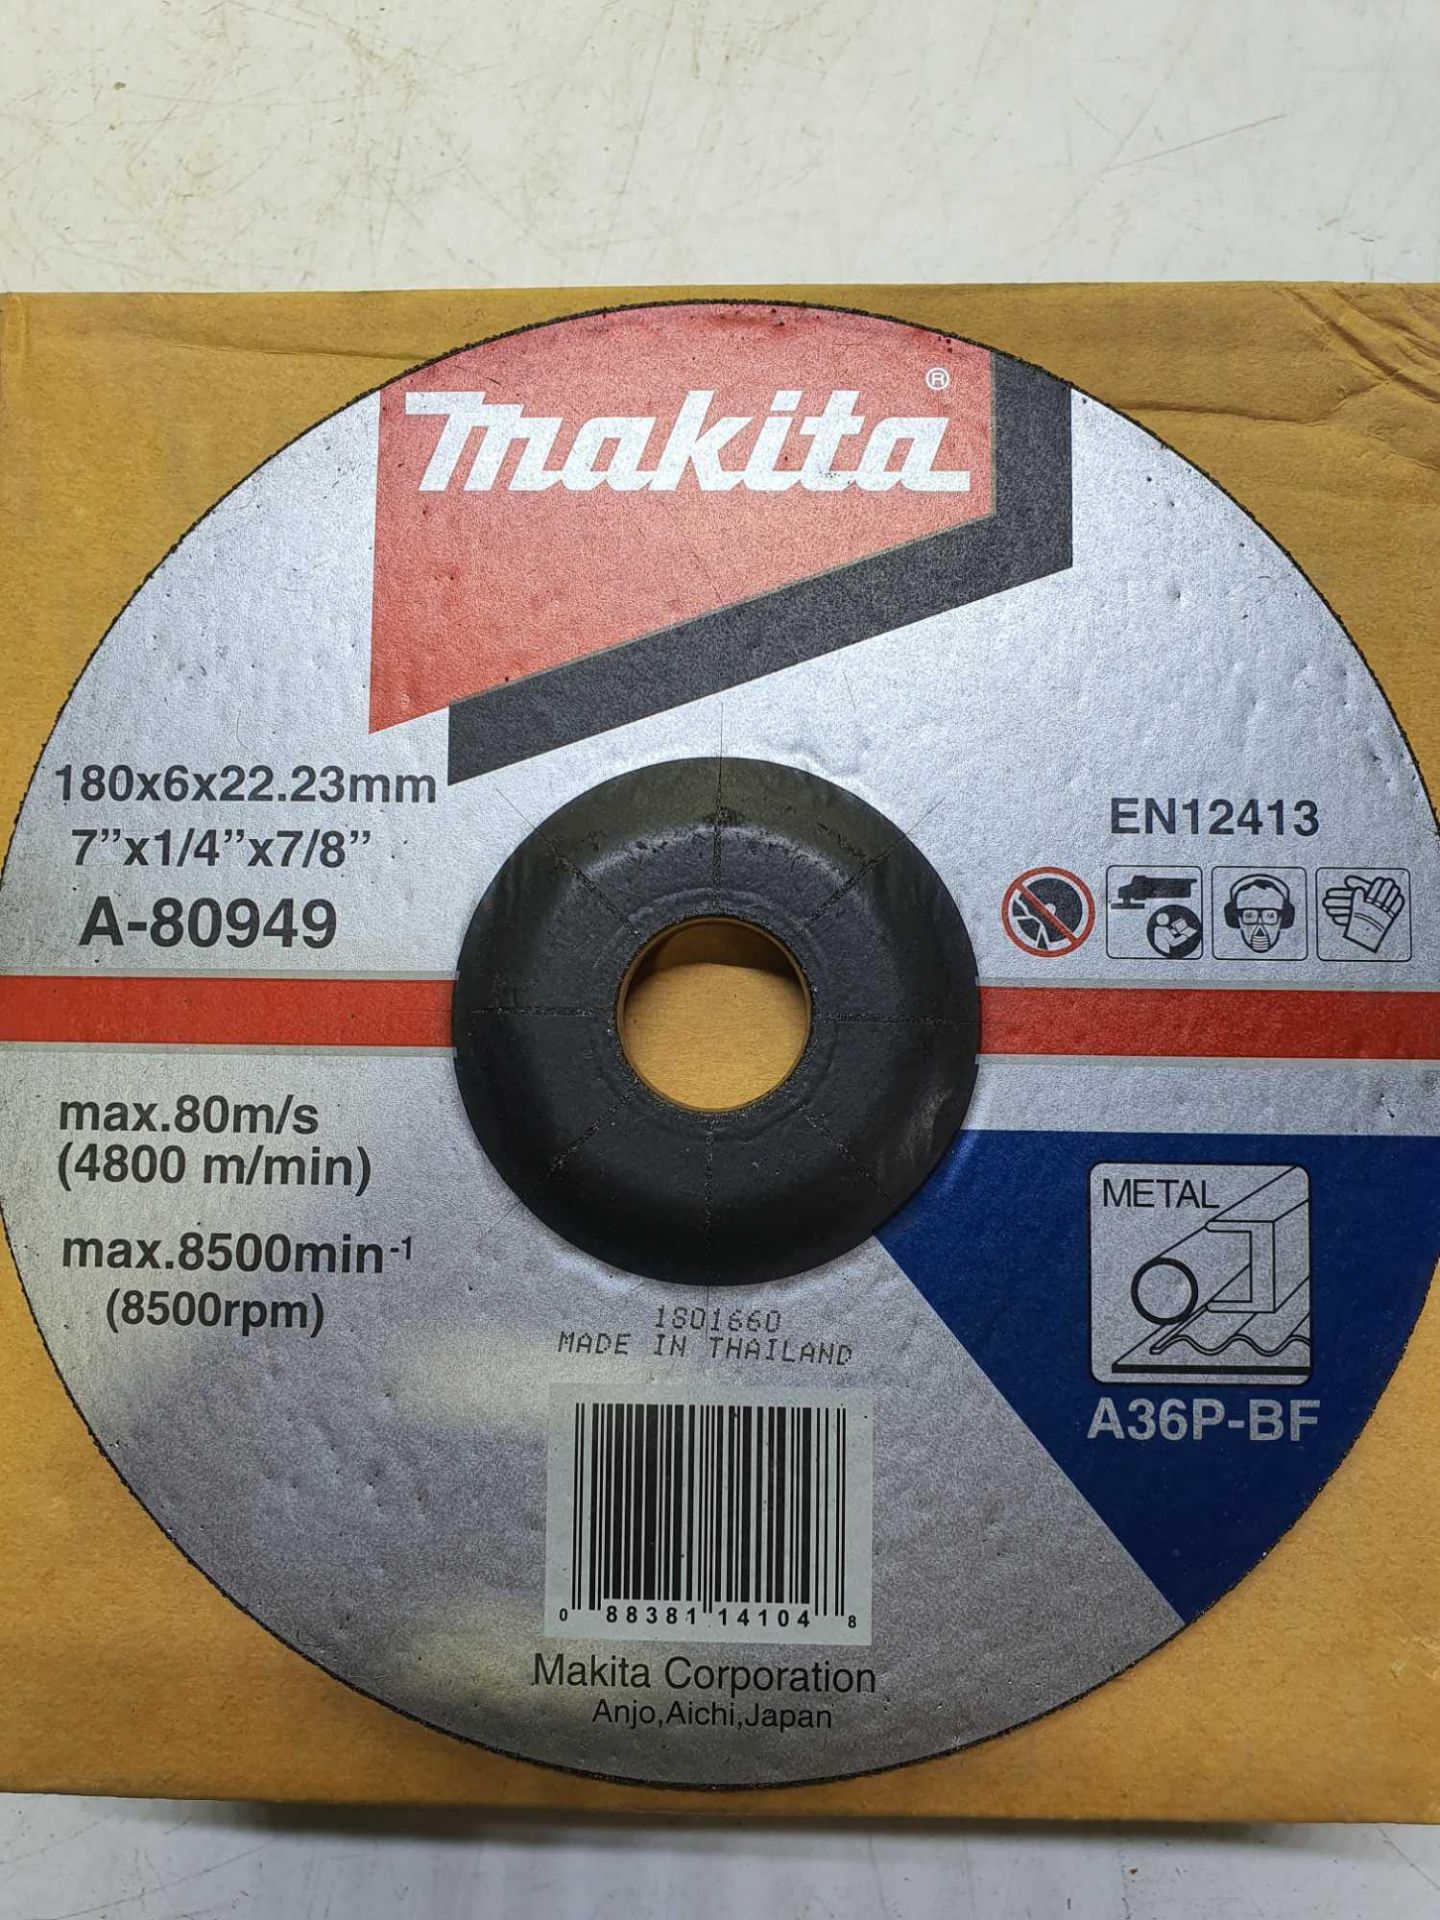 Makita grinding discs - Image 2 of 2